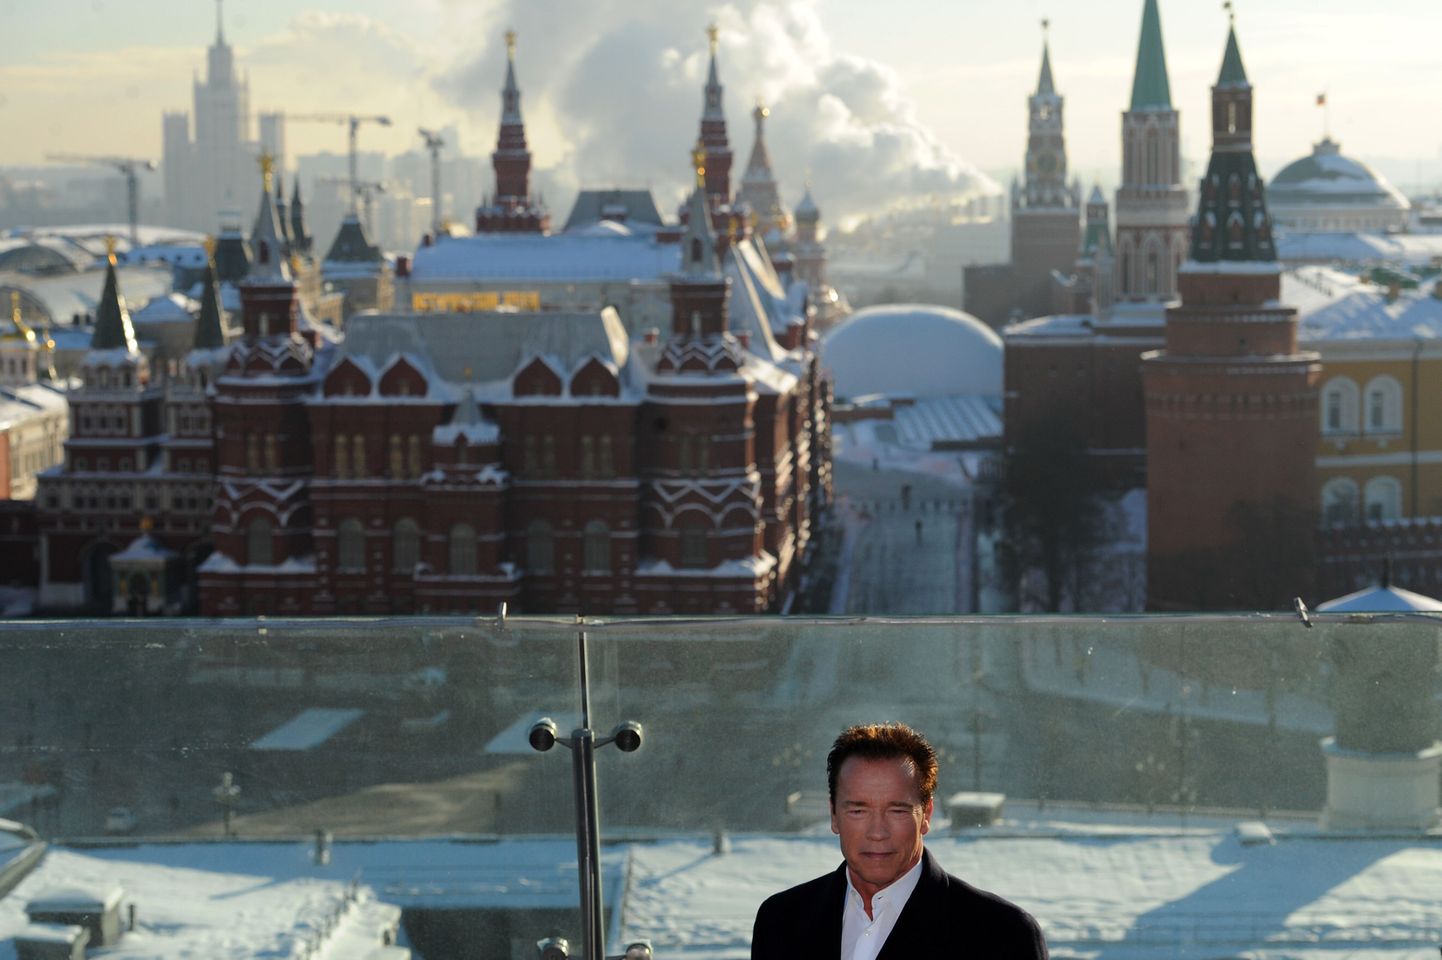 Arnold Schwarzenegger Moskvas Ritz Carlton Hoteli katusel poseerimas. Moskva juhib kalleimate hotellidega linna edetabelit juba üheksandat aastat järjest.